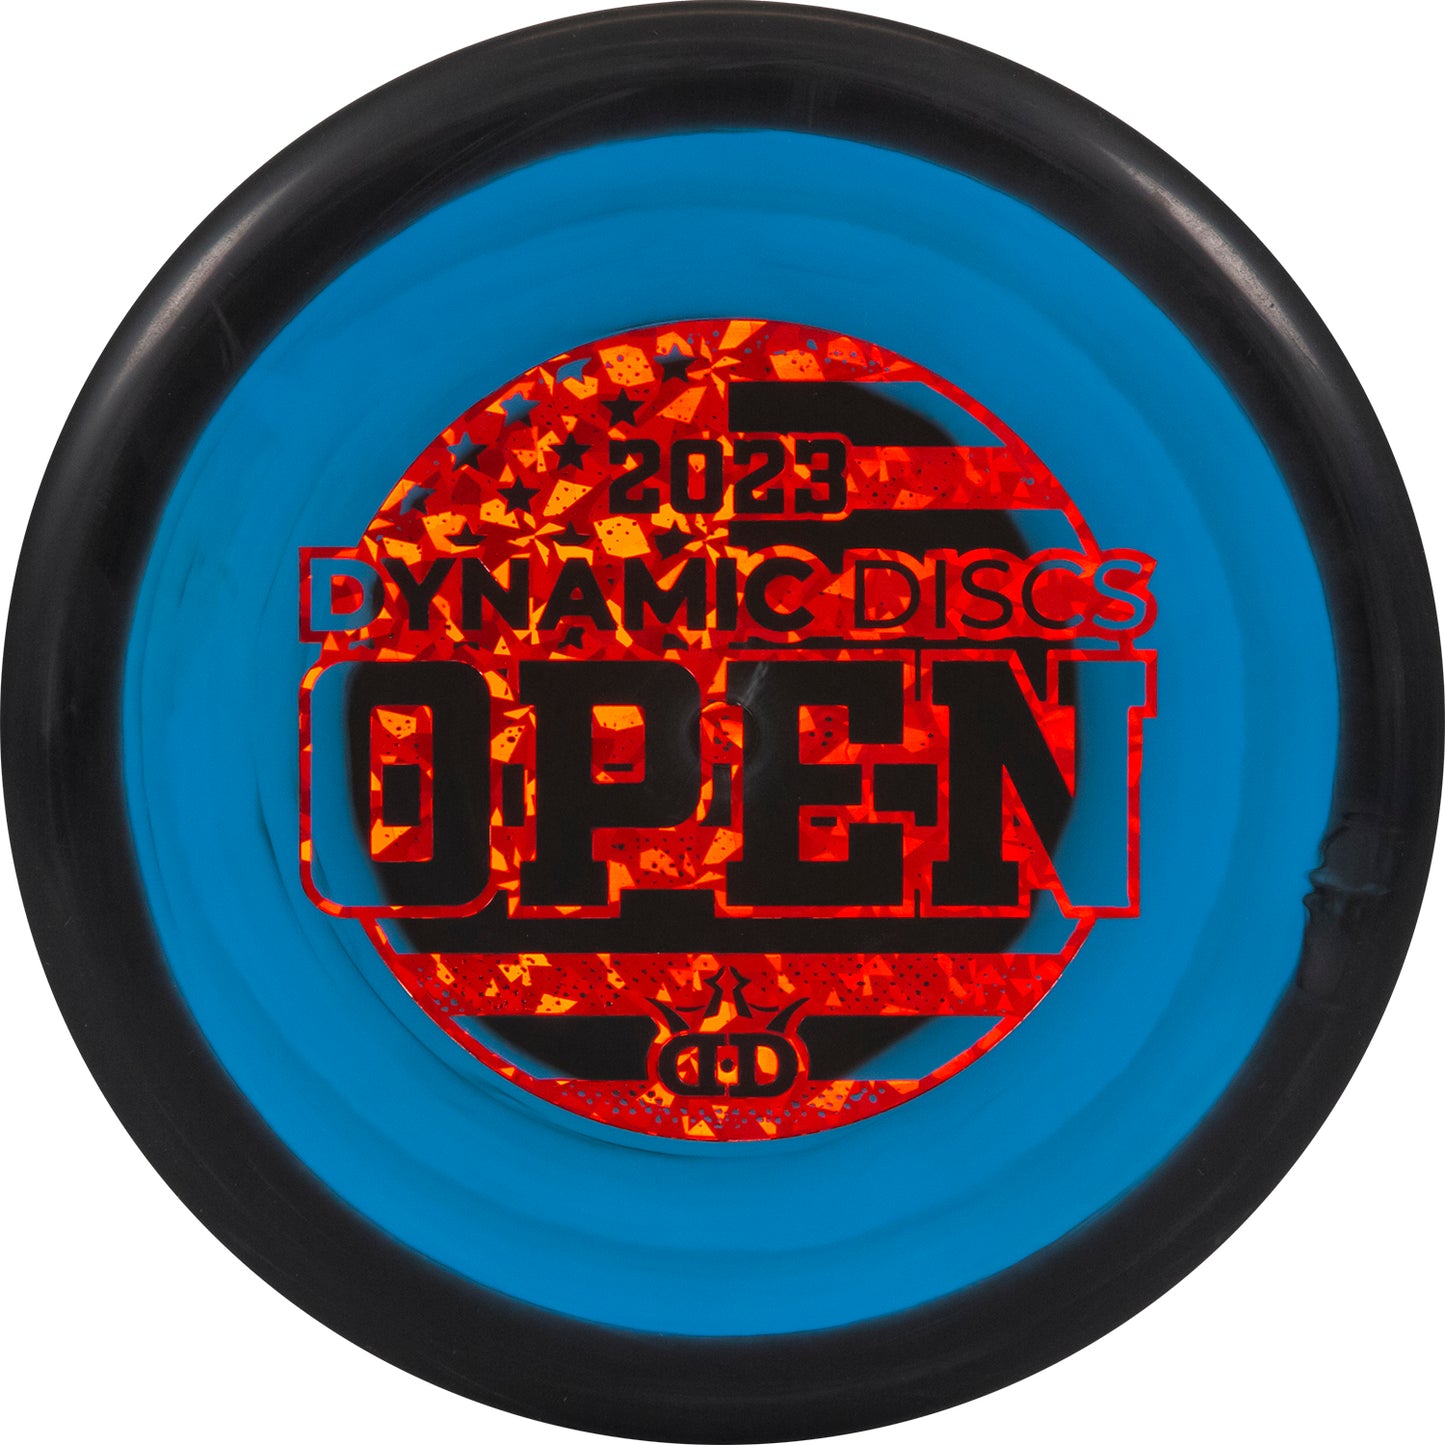 Dynamic Discs Classic Blend Orbit Eye Judge Dynamic Discs Open Flag Fundraiser